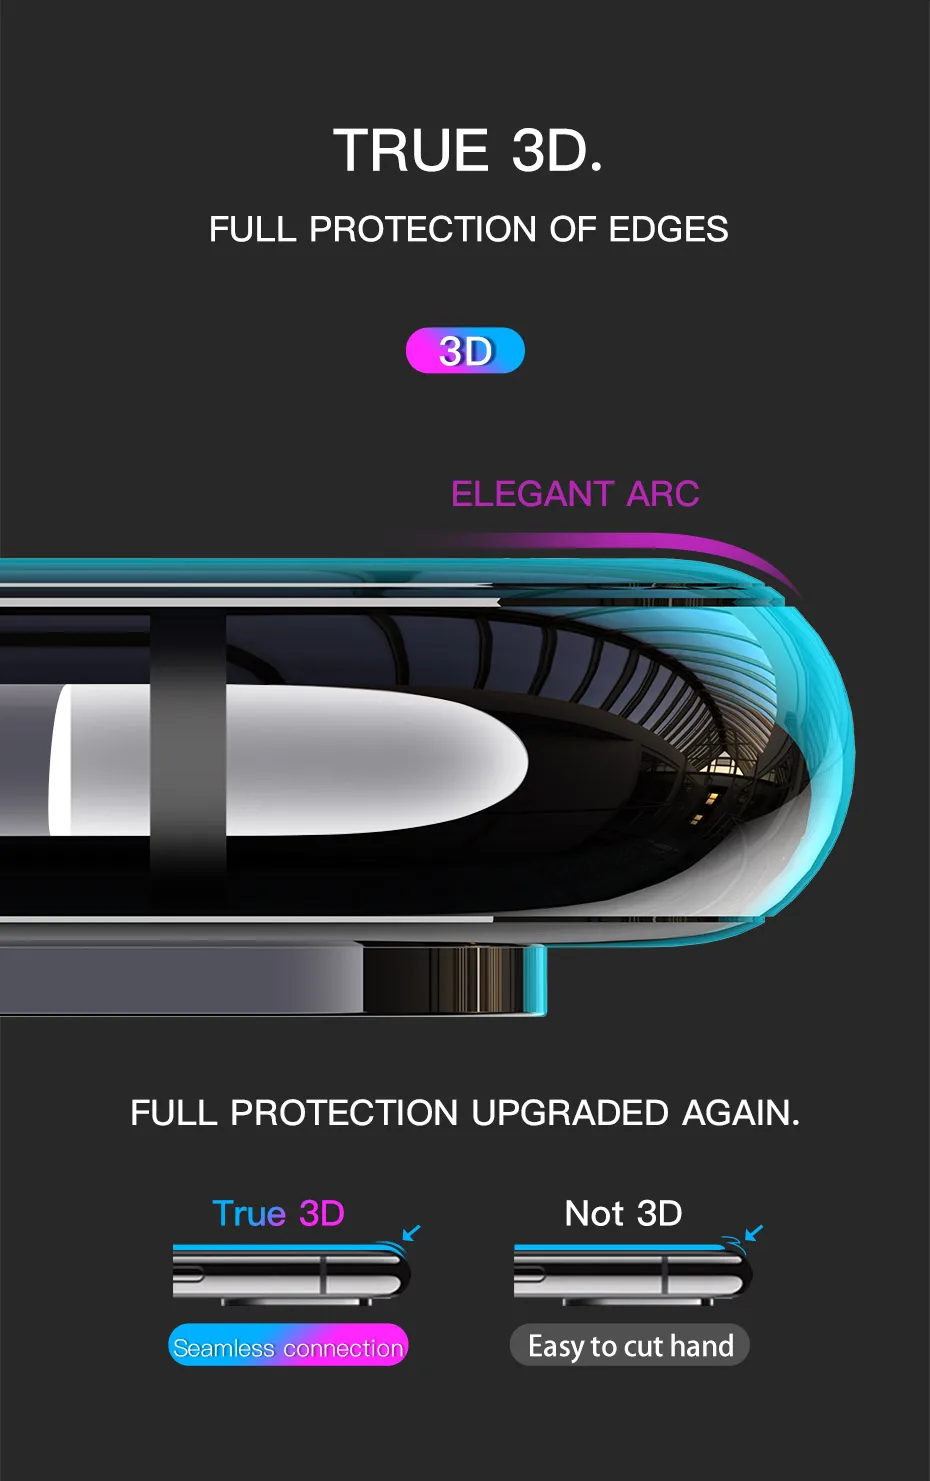 HOCO полное покрытие закаленное стекло для iPhone 11 Pro Max XR X XS Max защита экрана 3D Защитное стекло для iPhone 7 8 Plus